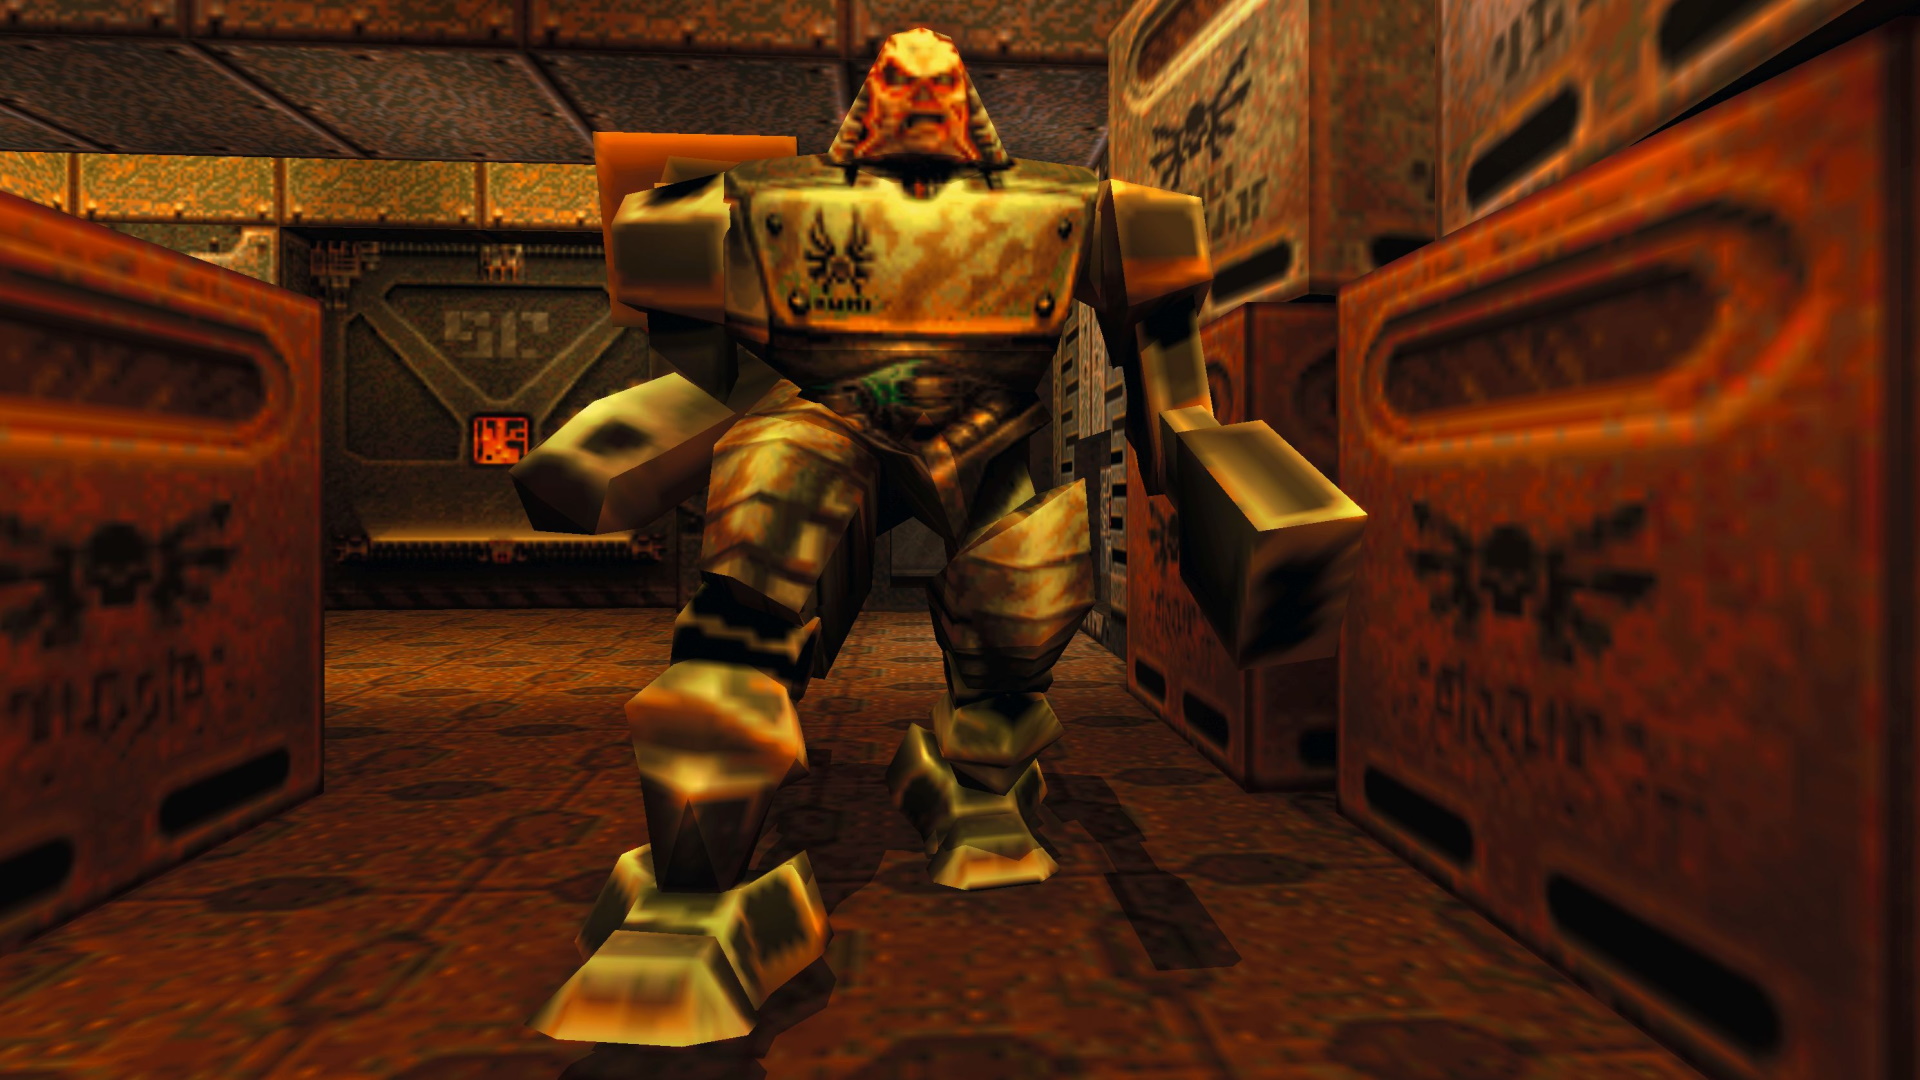 Action Quake 2, nenek moyang CSGO, sekarang memiliki rilis Steam mandiri